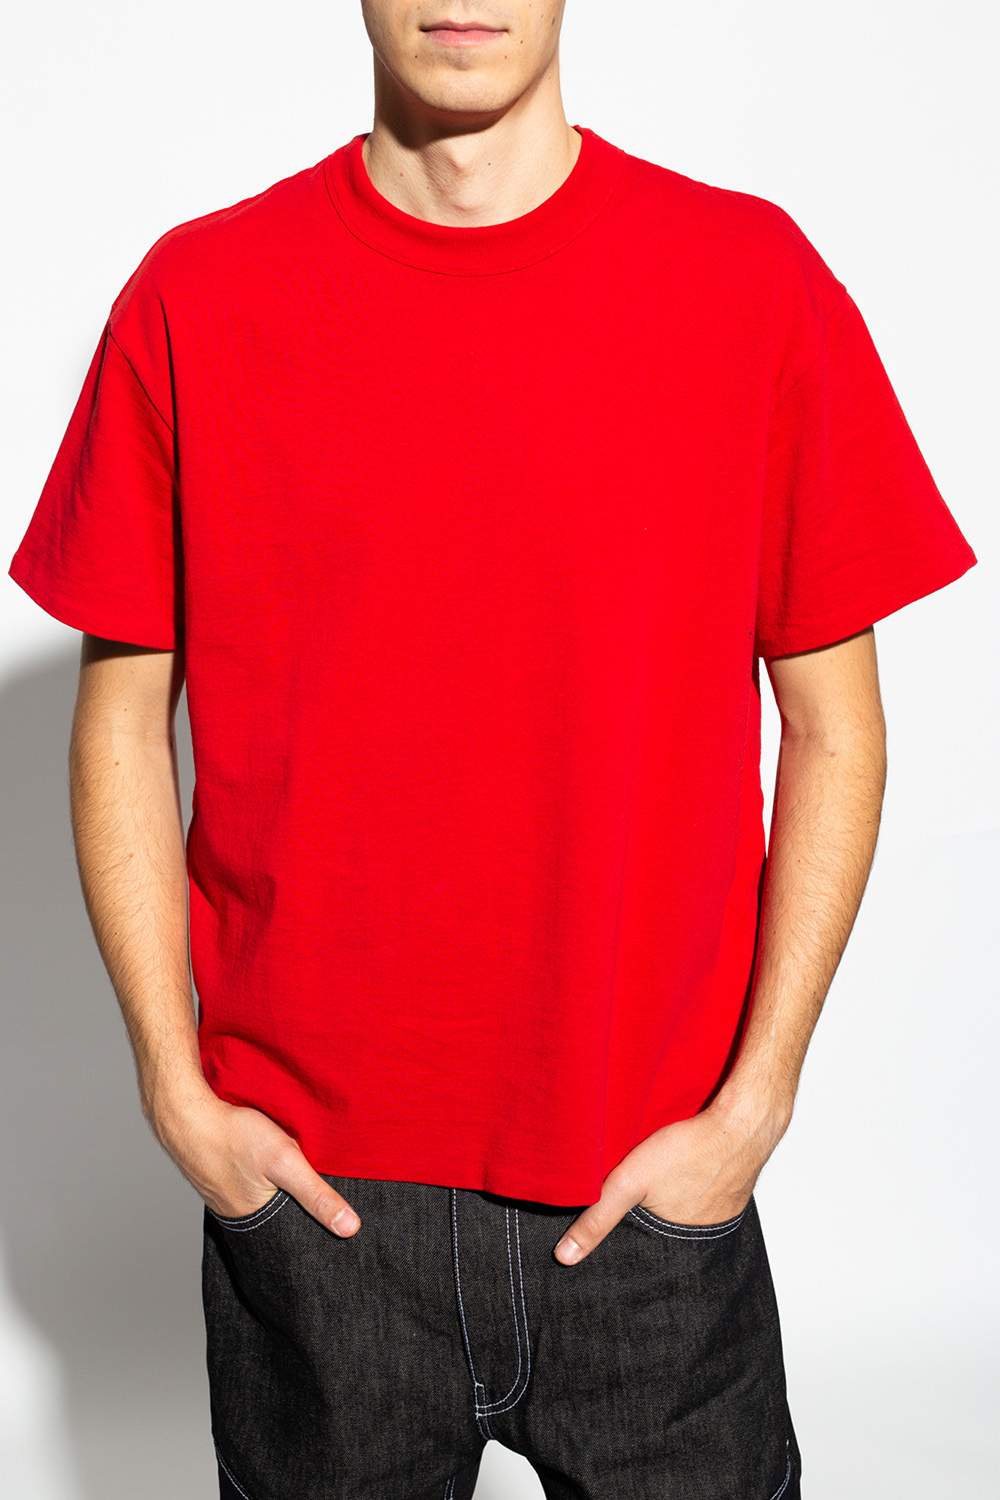 BOTTEGA VENETA, Red Men's T-shirt